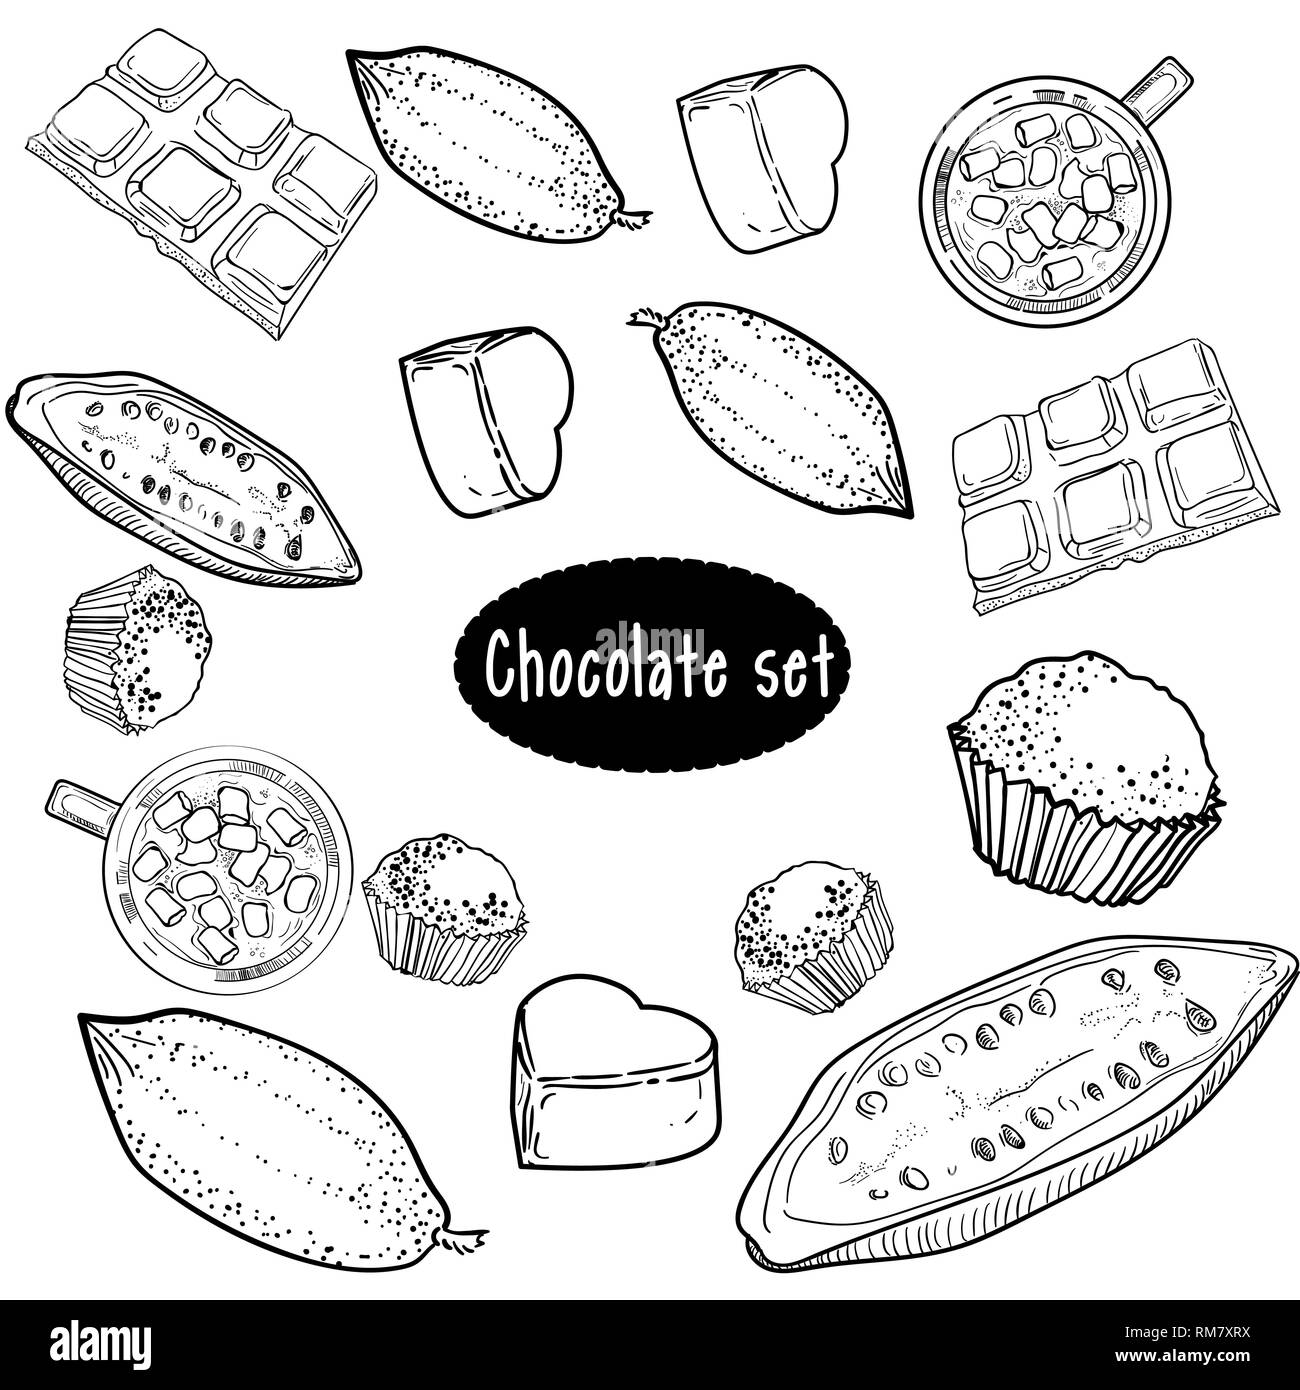 Chocolate Bar Sketch Engraving Vector Illustration, Vectors | GraphicRiver